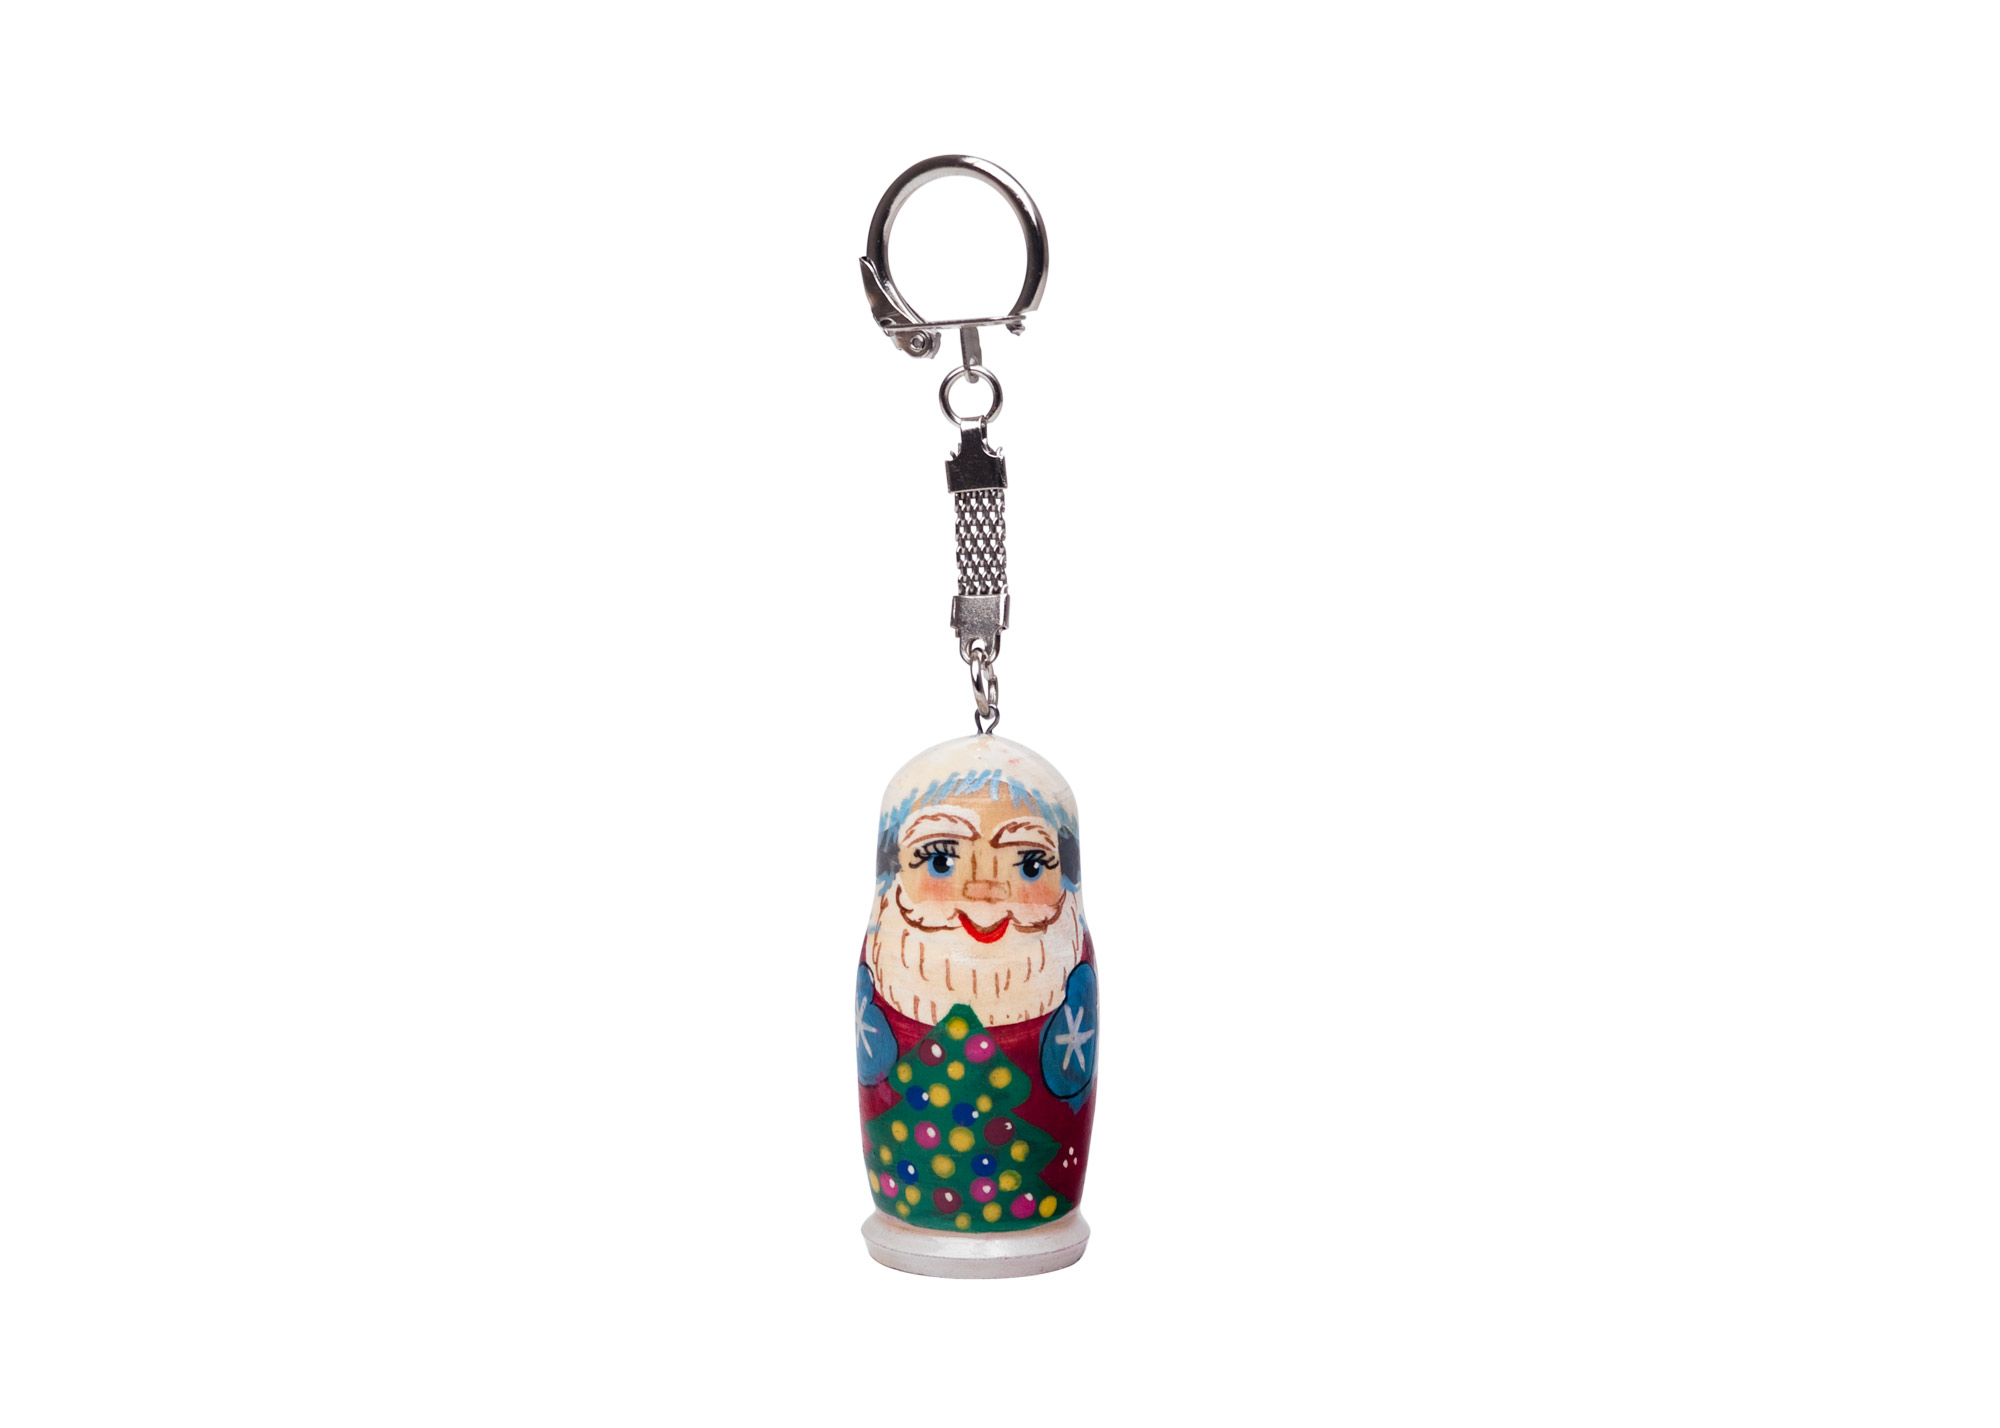 Buy Santa Keychain 1.75" at GoldenCockerel.com